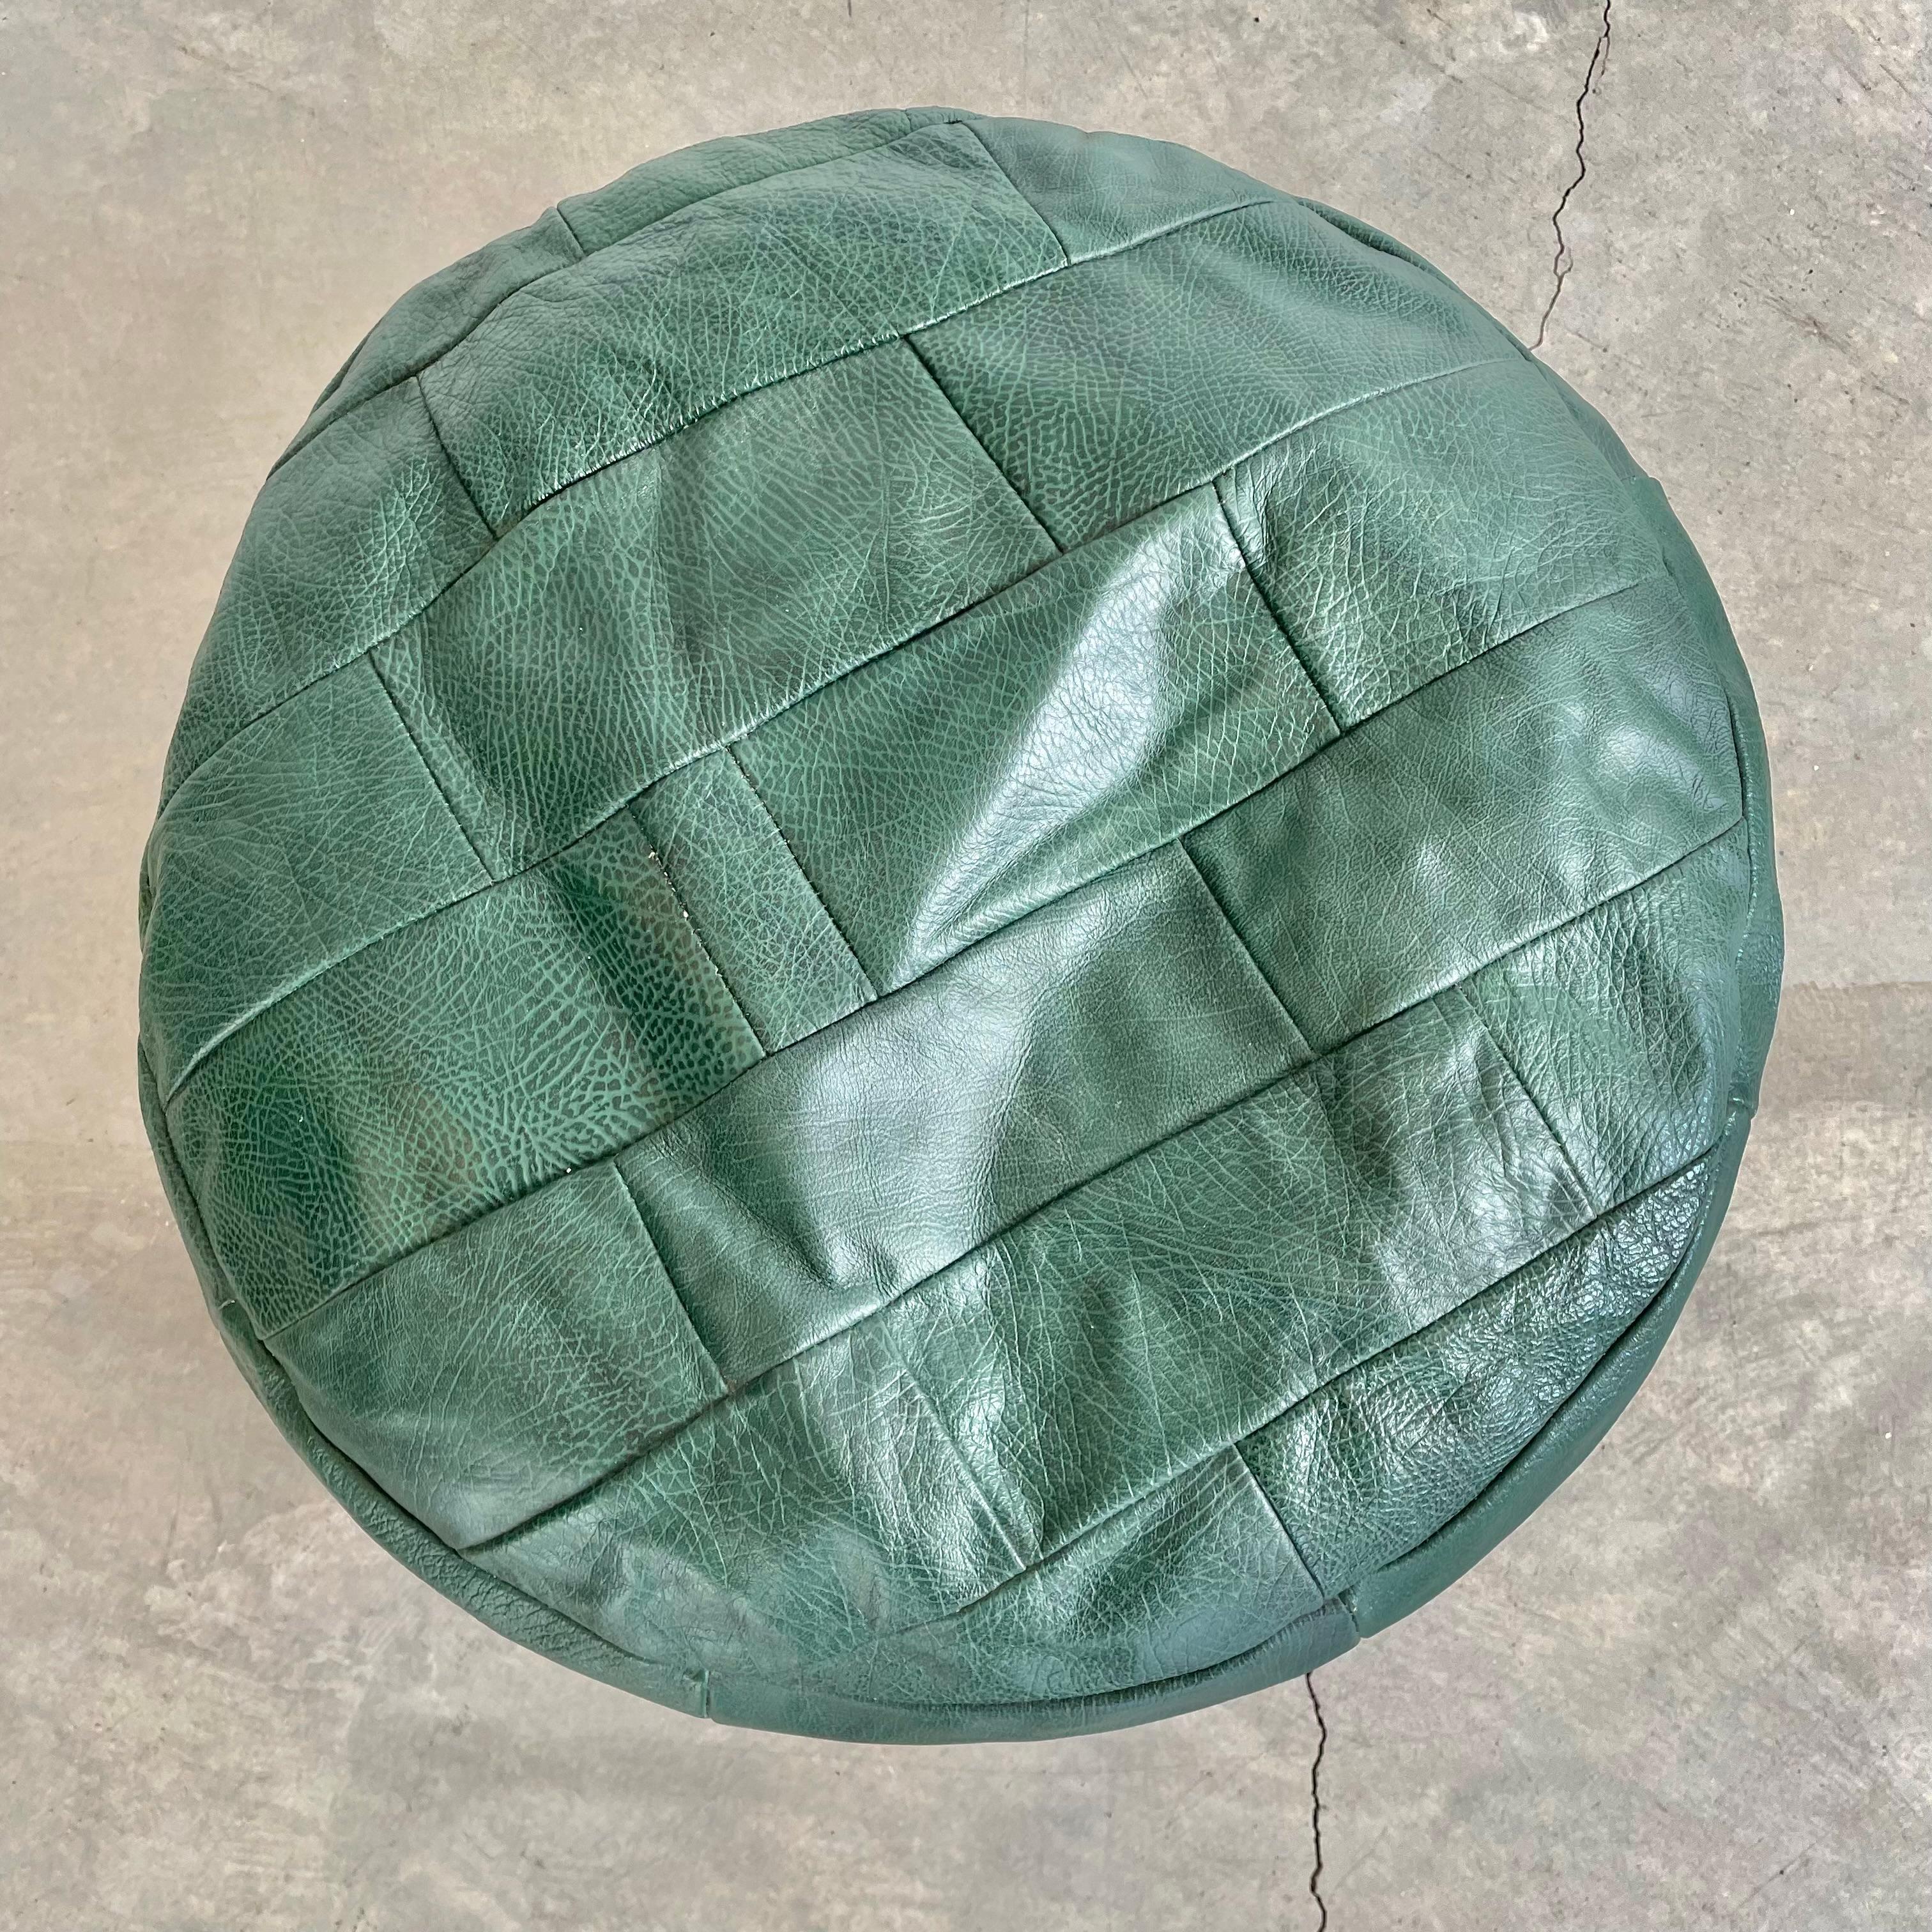 Swiss De Sede Emerald Green Leather Patchwork Ottoman, 1970s Switzerland For Sale